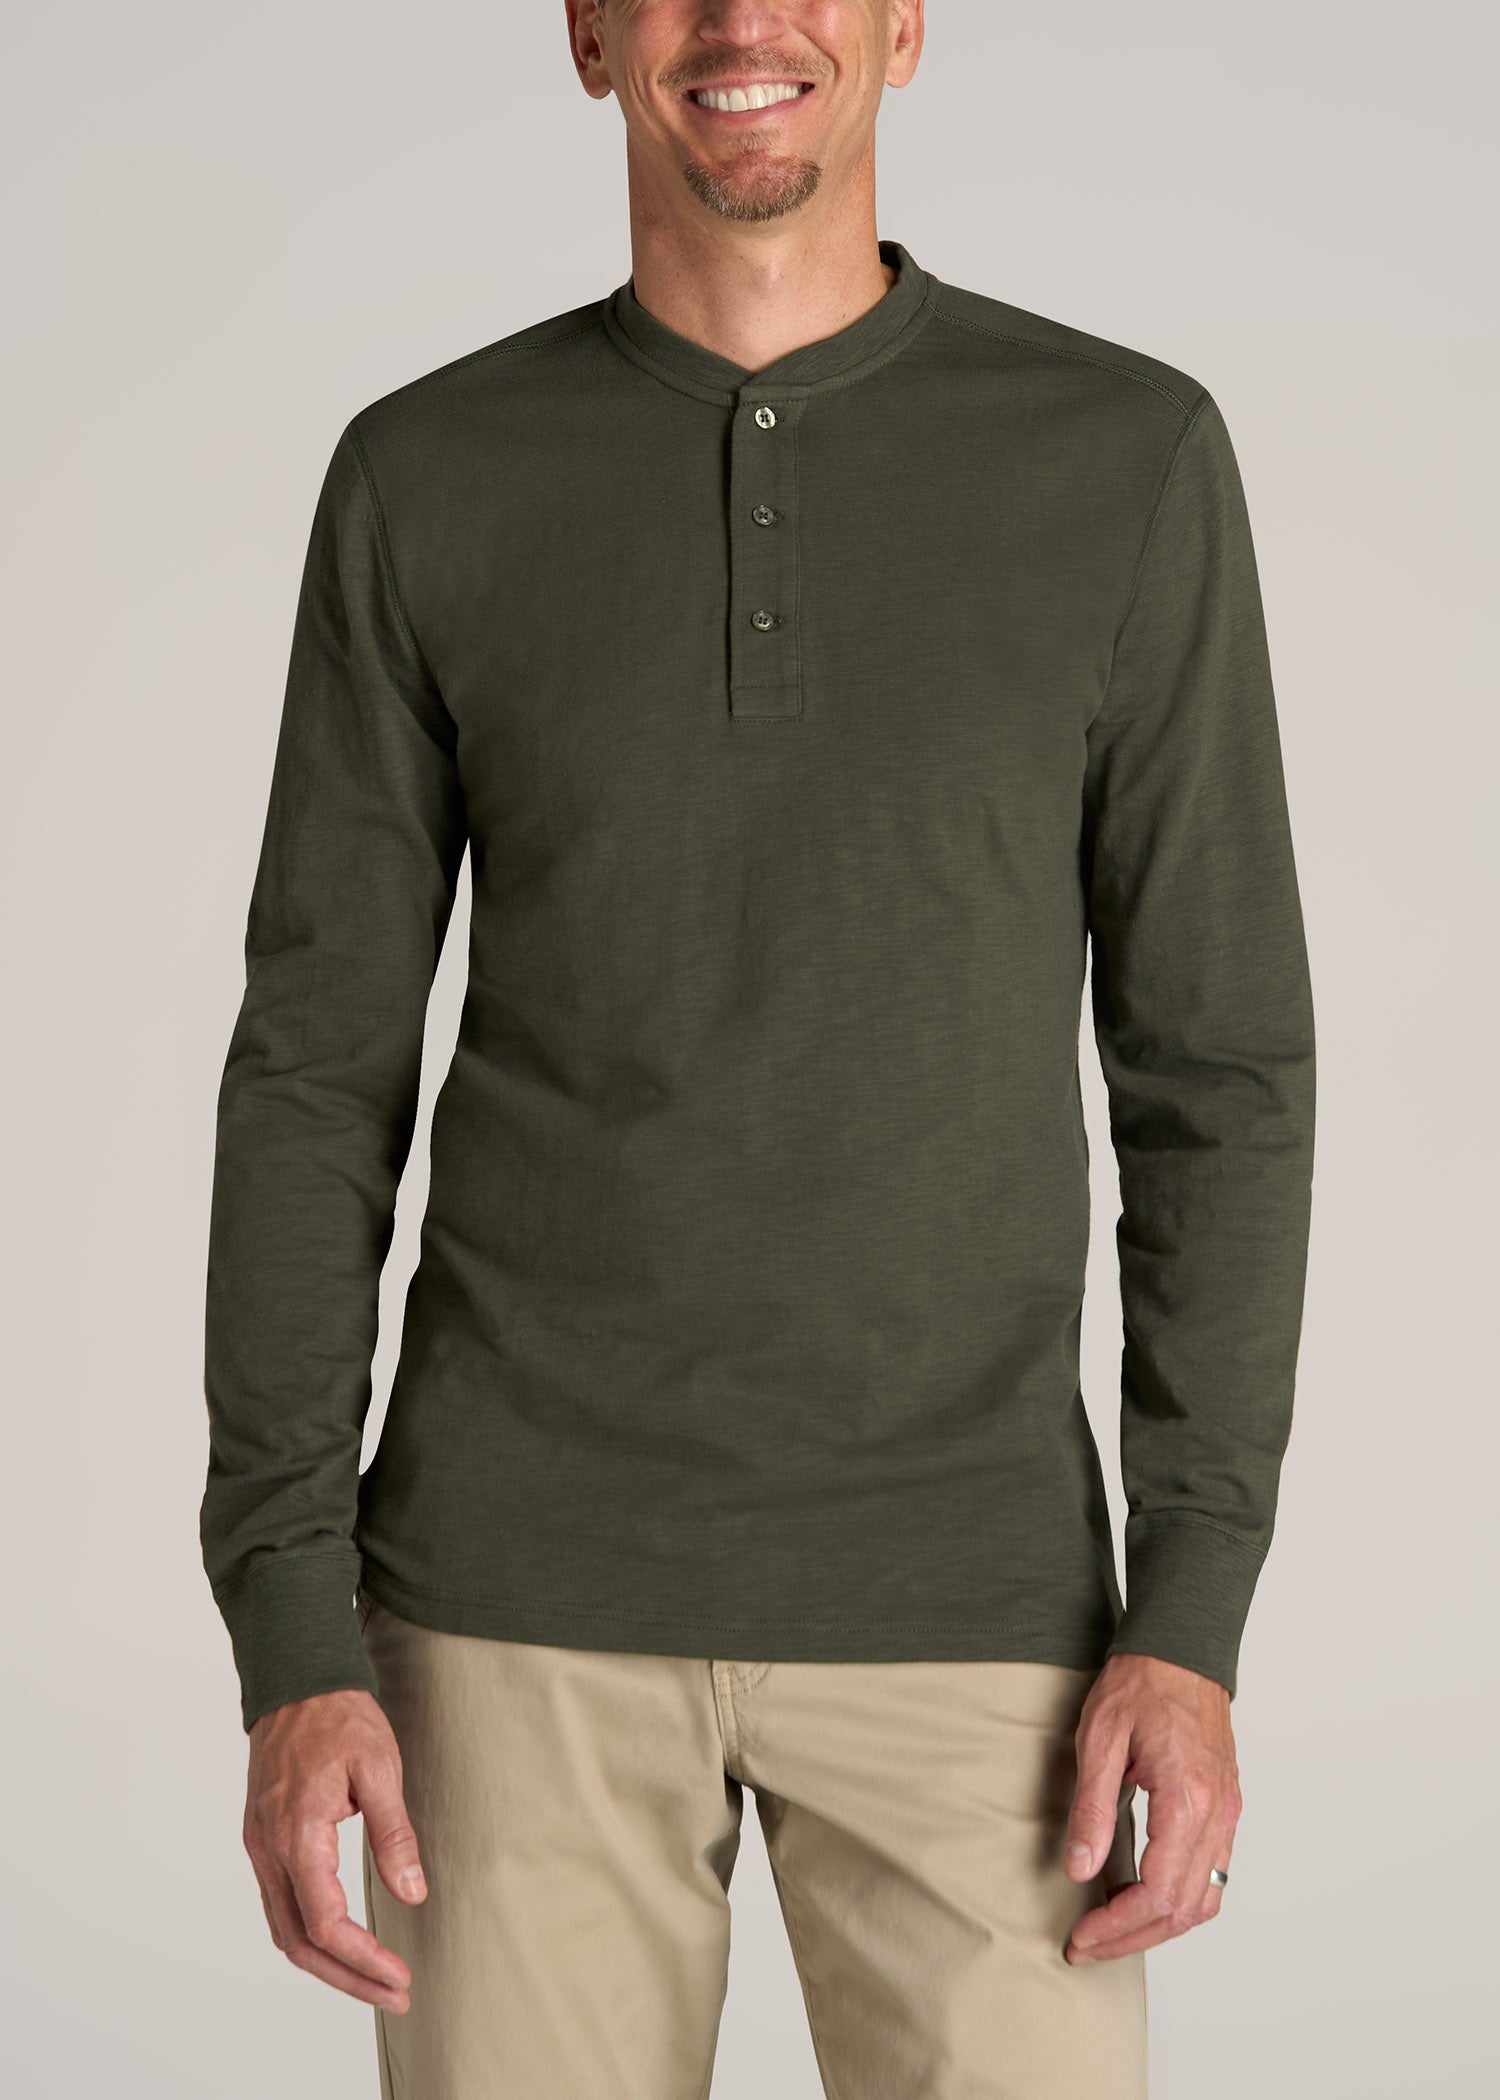 Long Sleeve Slub Henley Shirt for Tall Men in Dark Olive Green